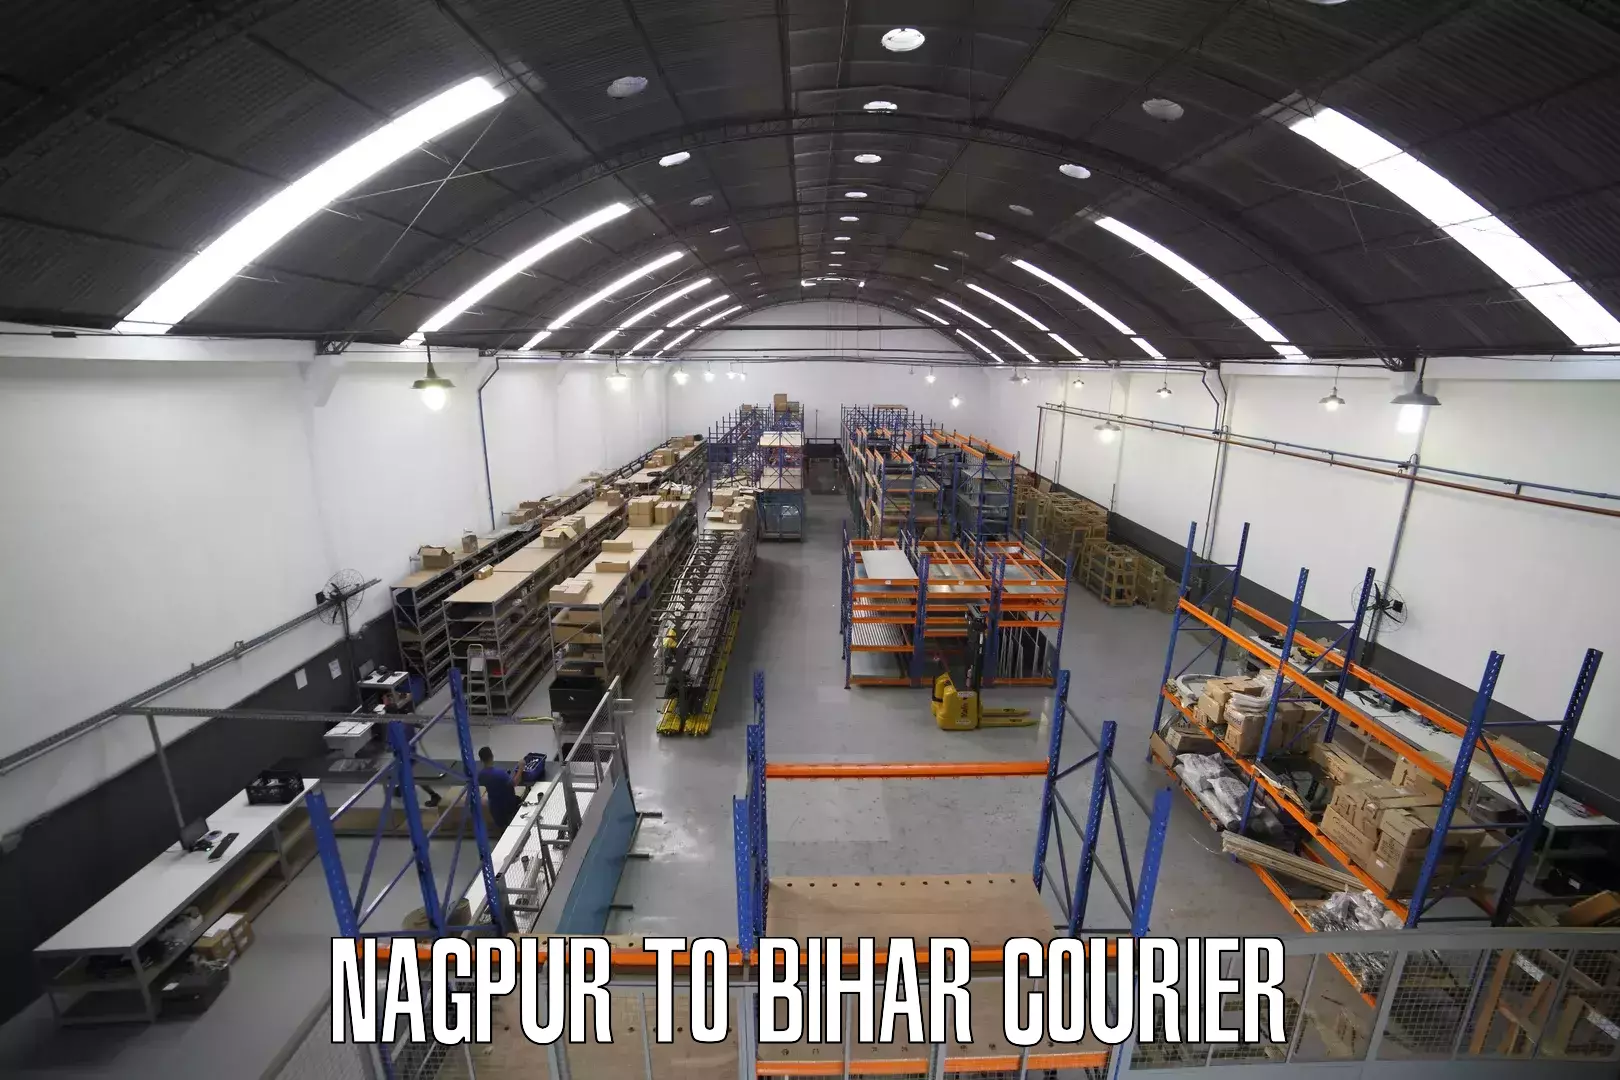 Pharmaceutical courier Nagpur to Bihar